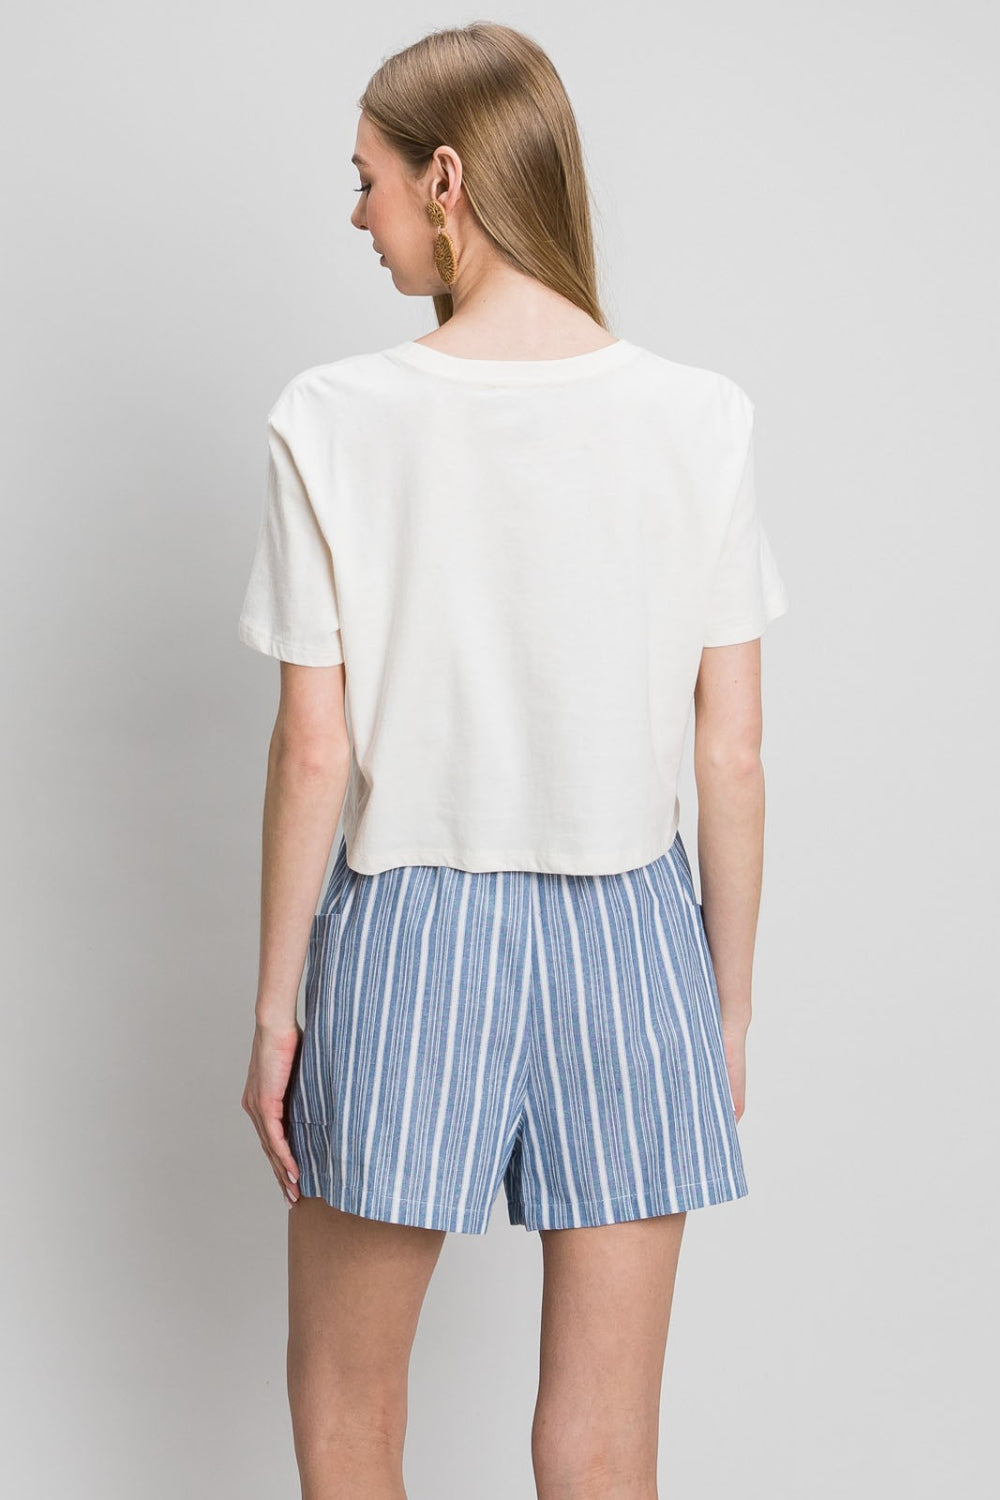 Cotton Bleu by Nu Label Yarn Dye Striped Shorts - Three Bears Boutique